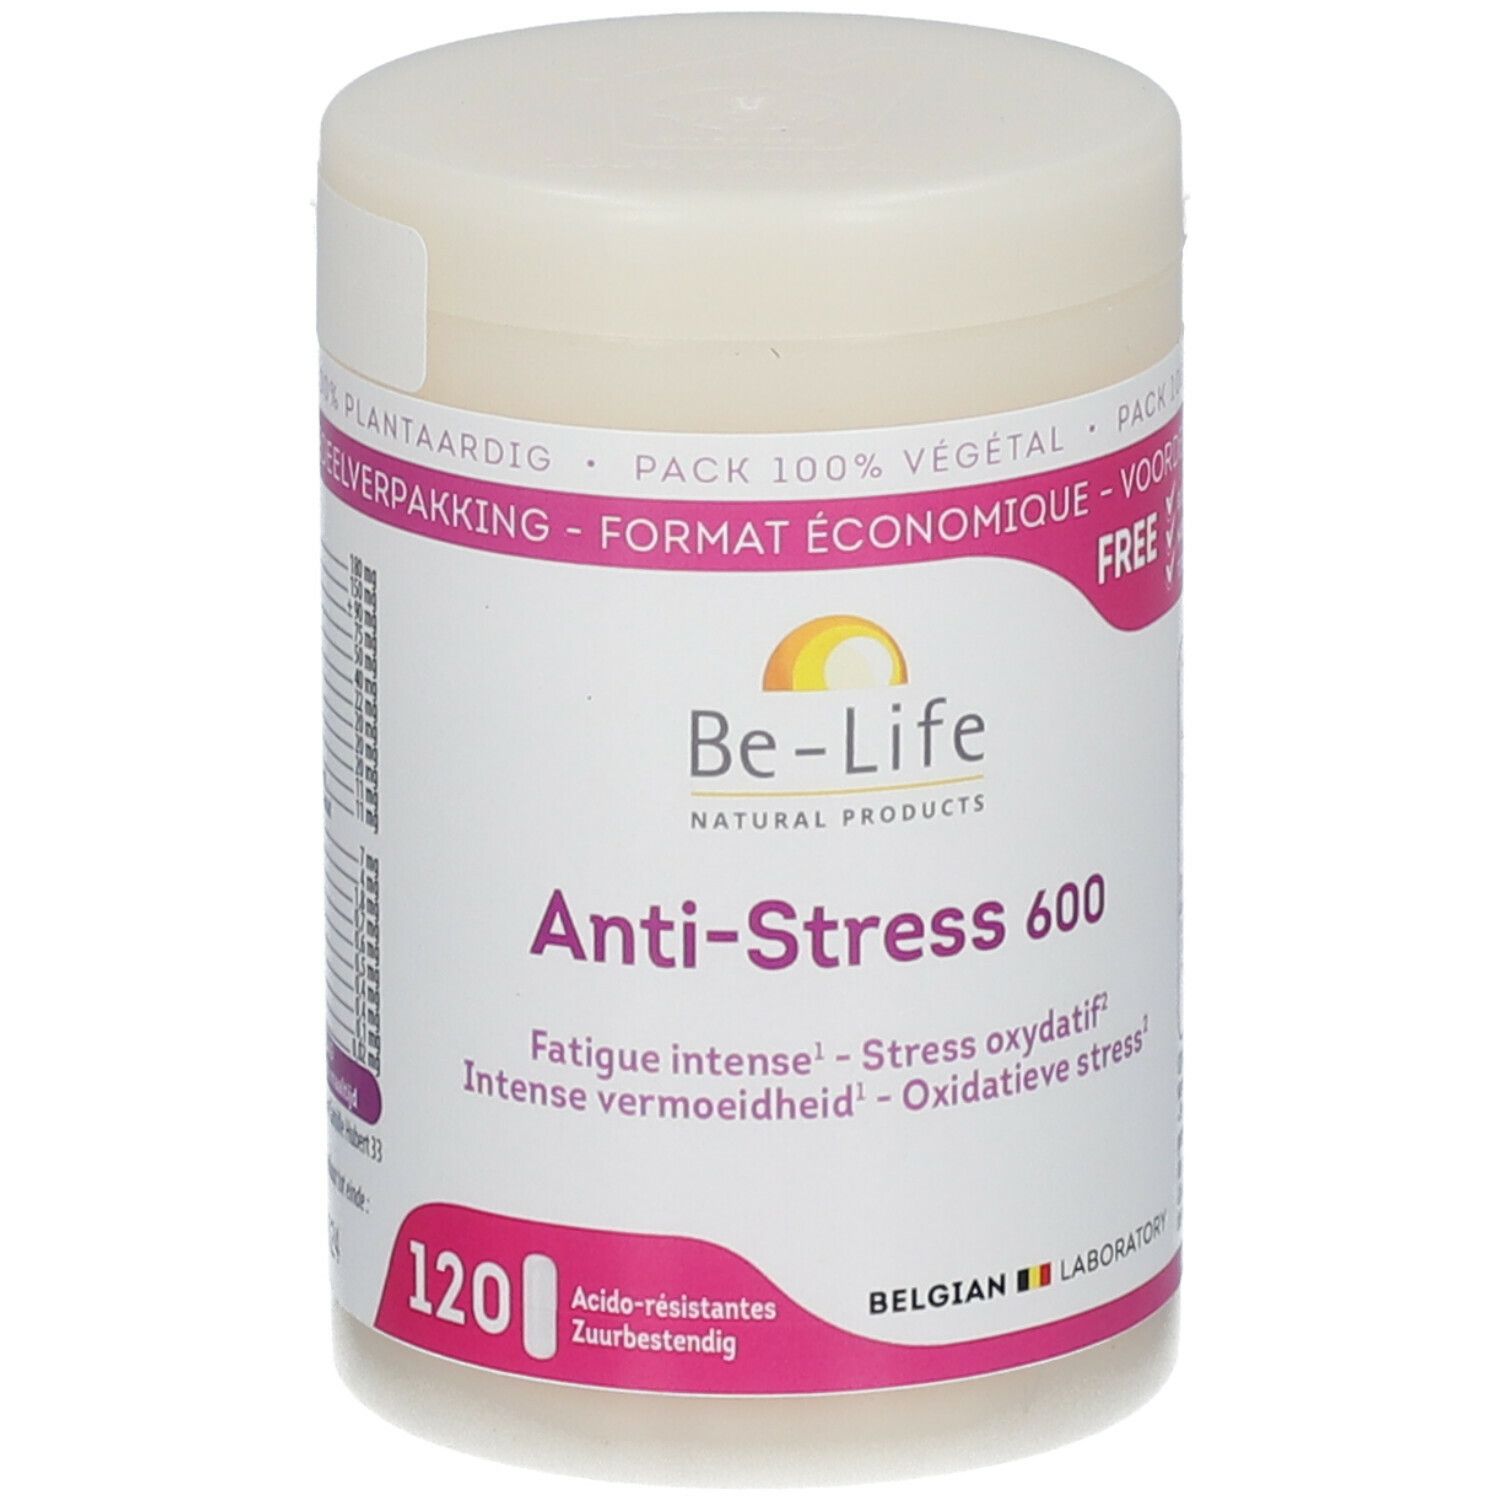 Be-Life Anti-Stress 600